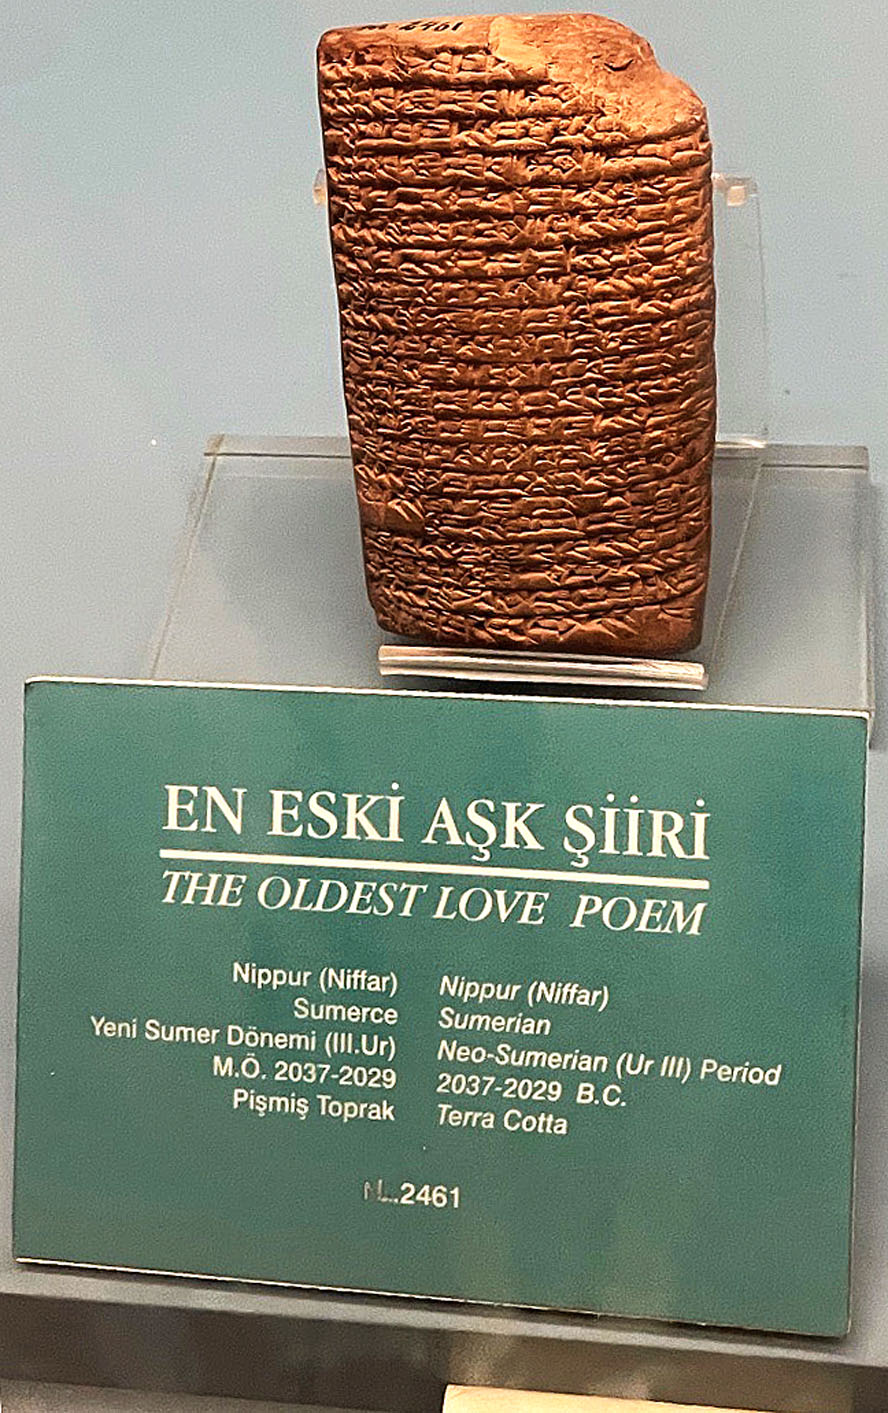 The World’s Oldest Love Poem